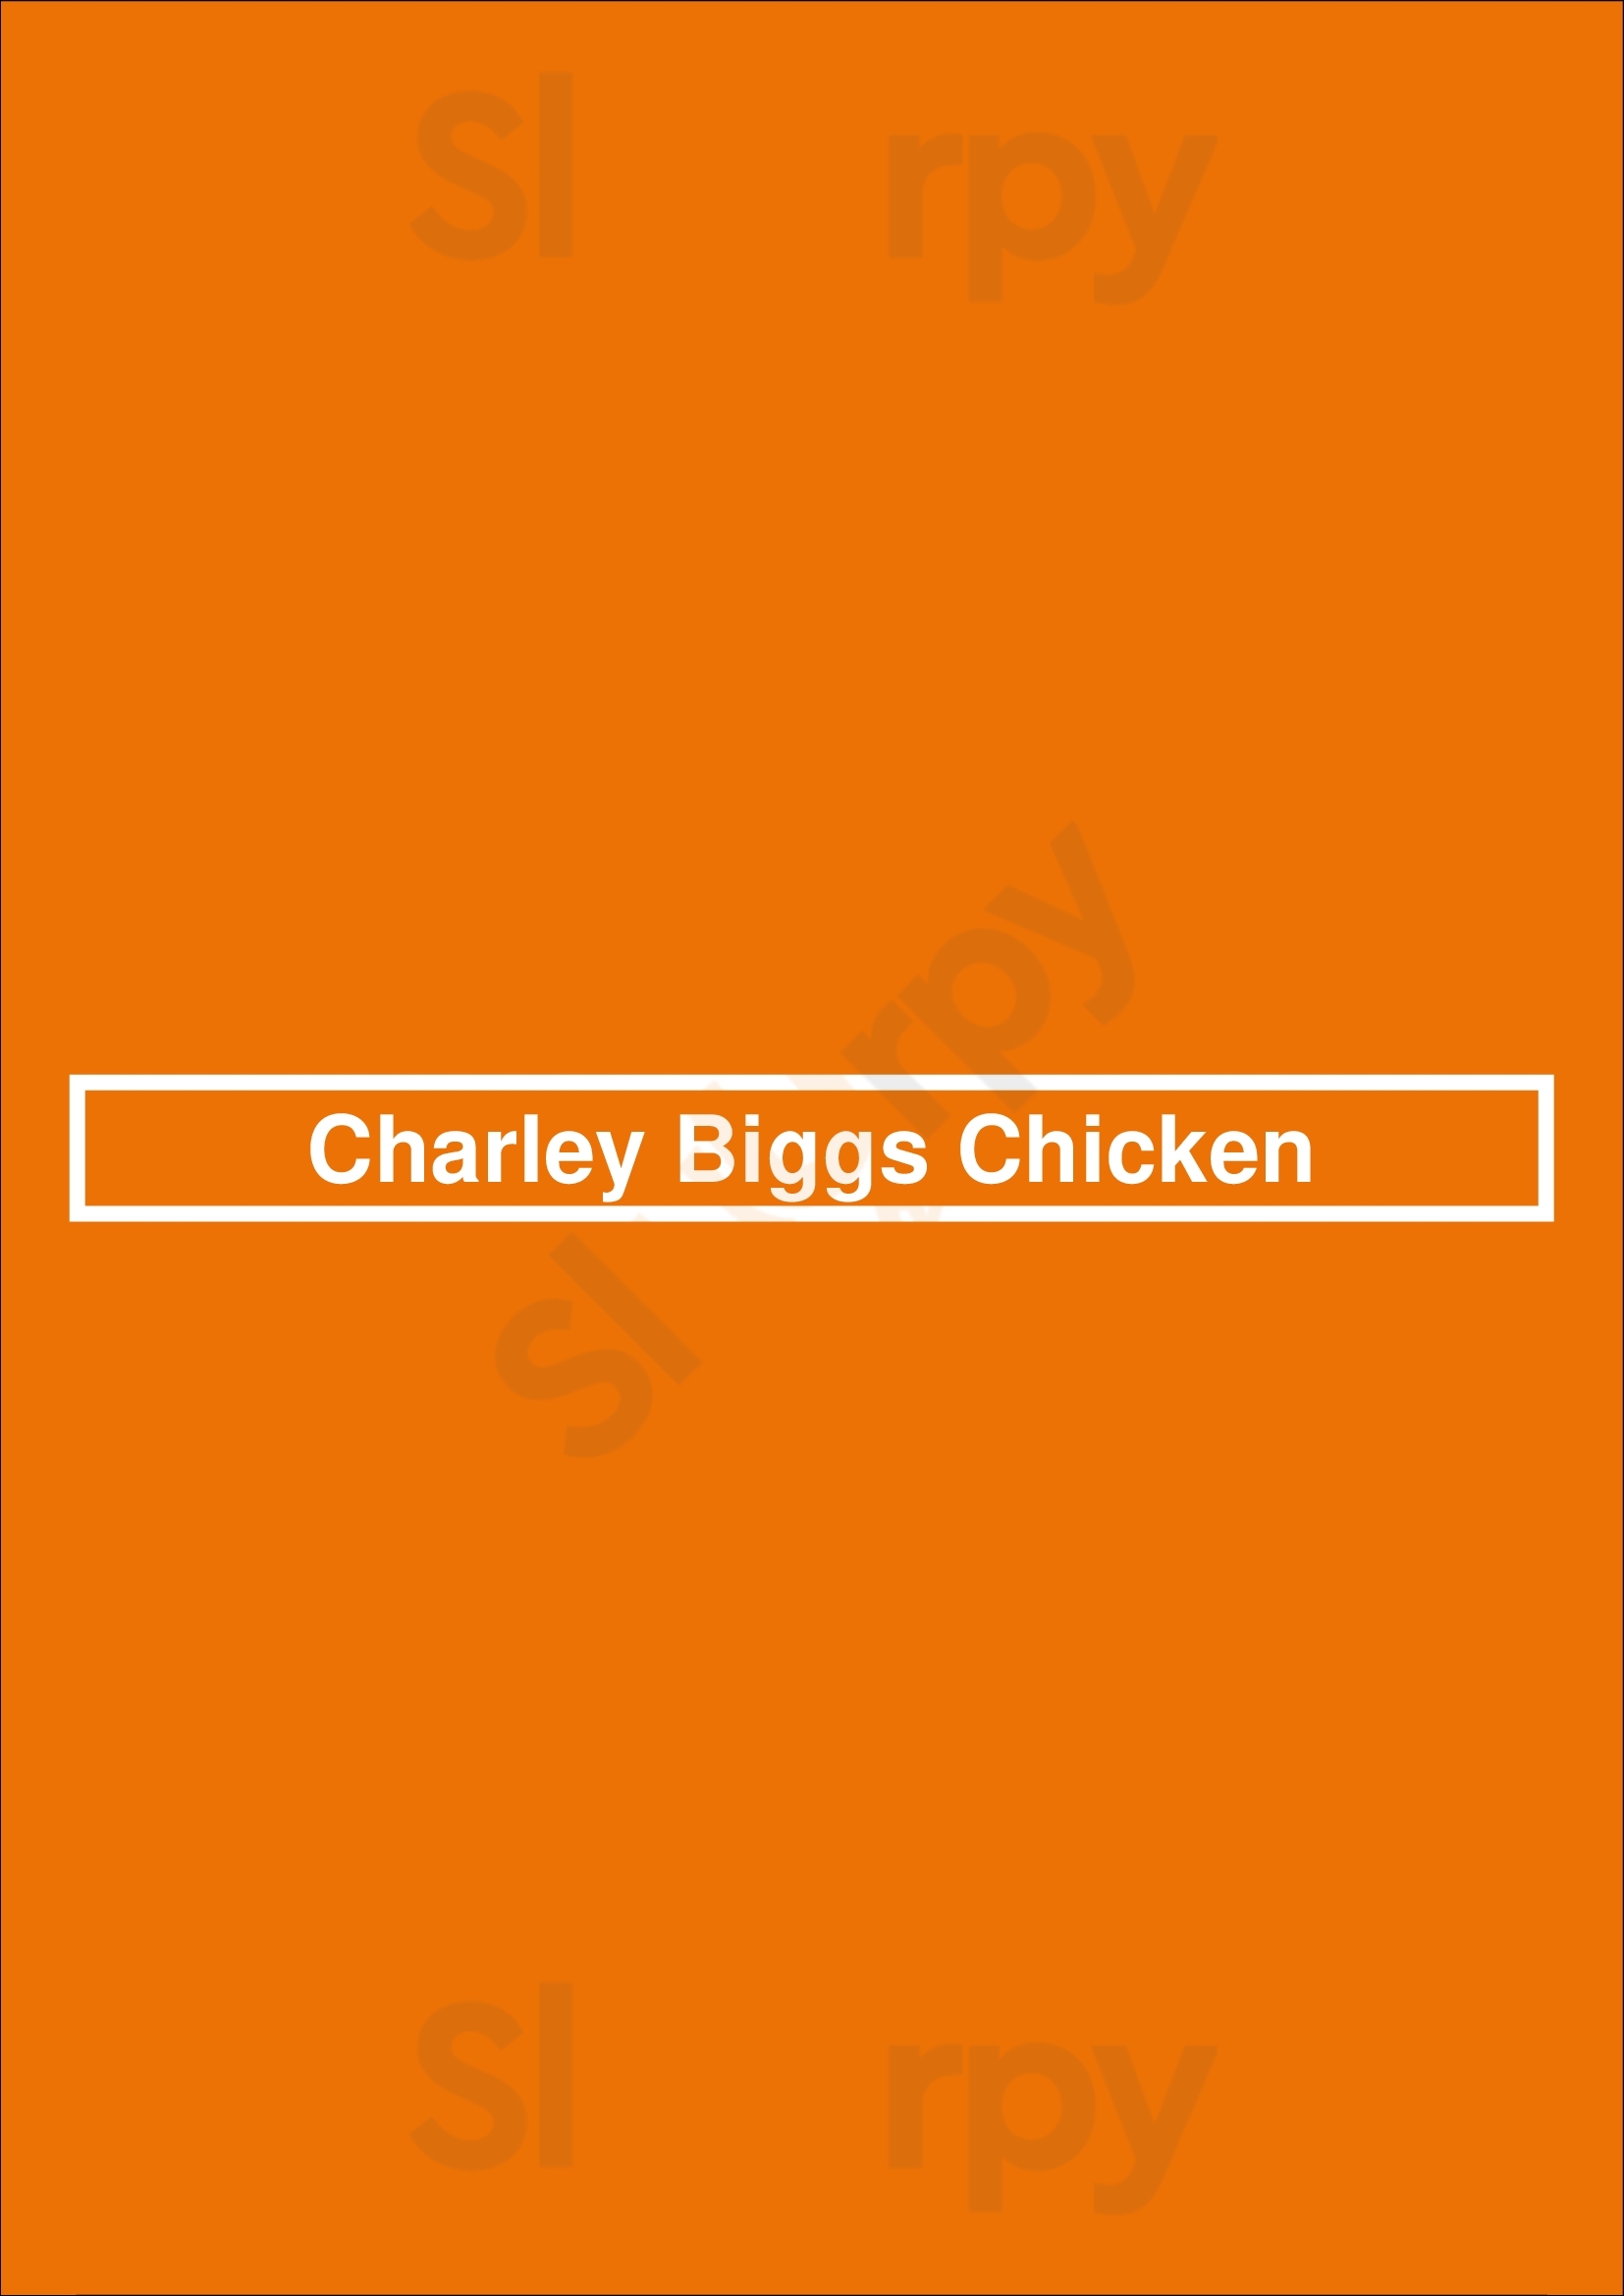 Charley Biggs Chicken Covington Menu - 1